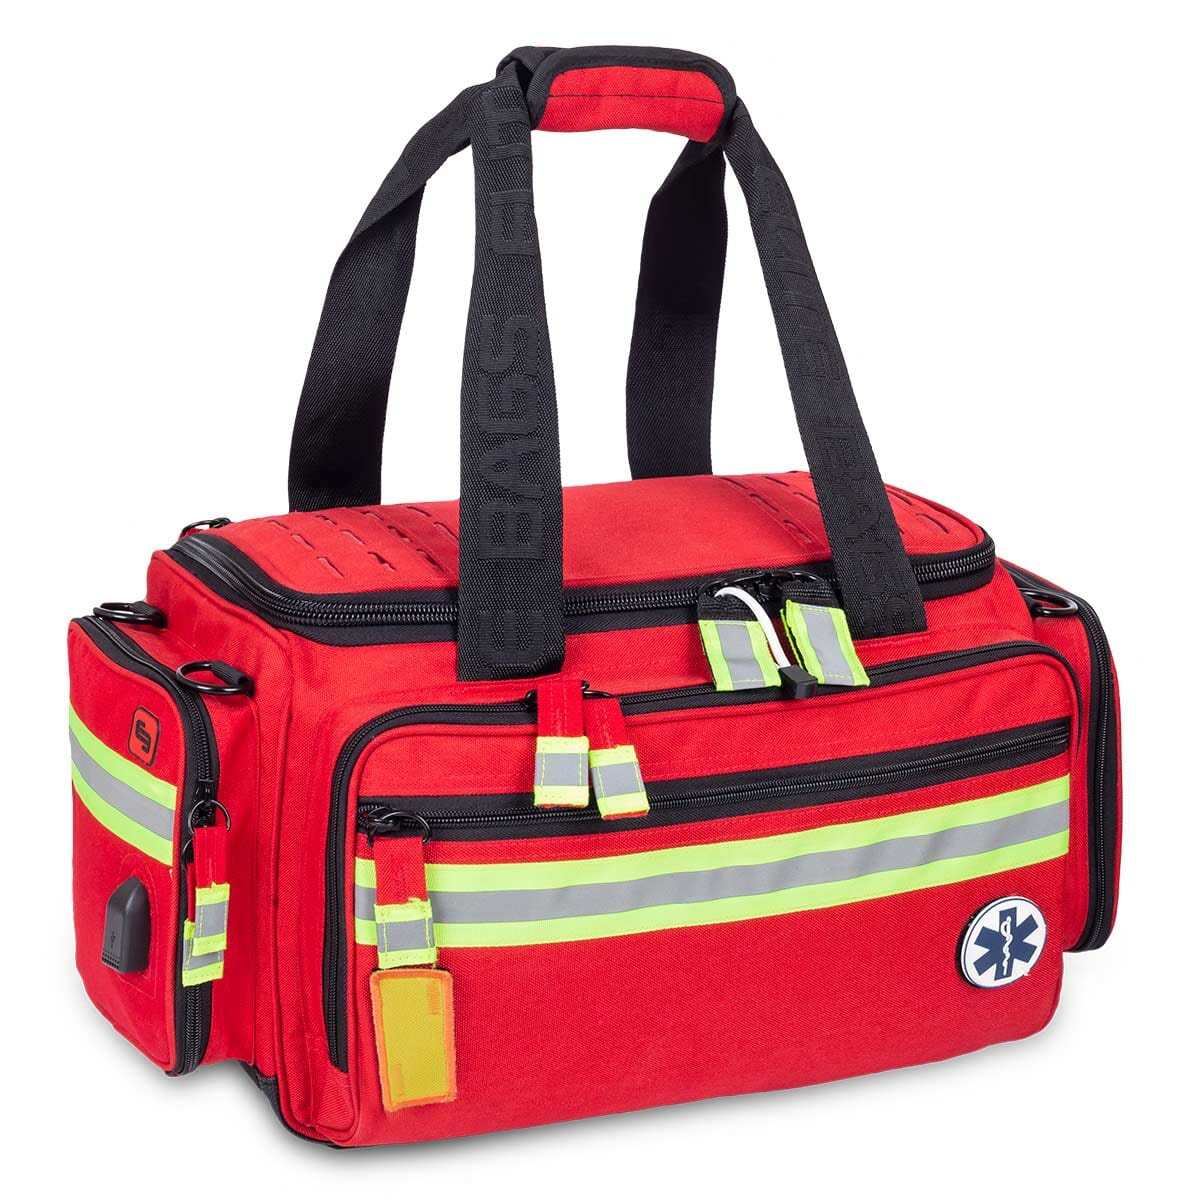 Buy Medical Trauma Bags Online | EMS Bags | Sands Canada